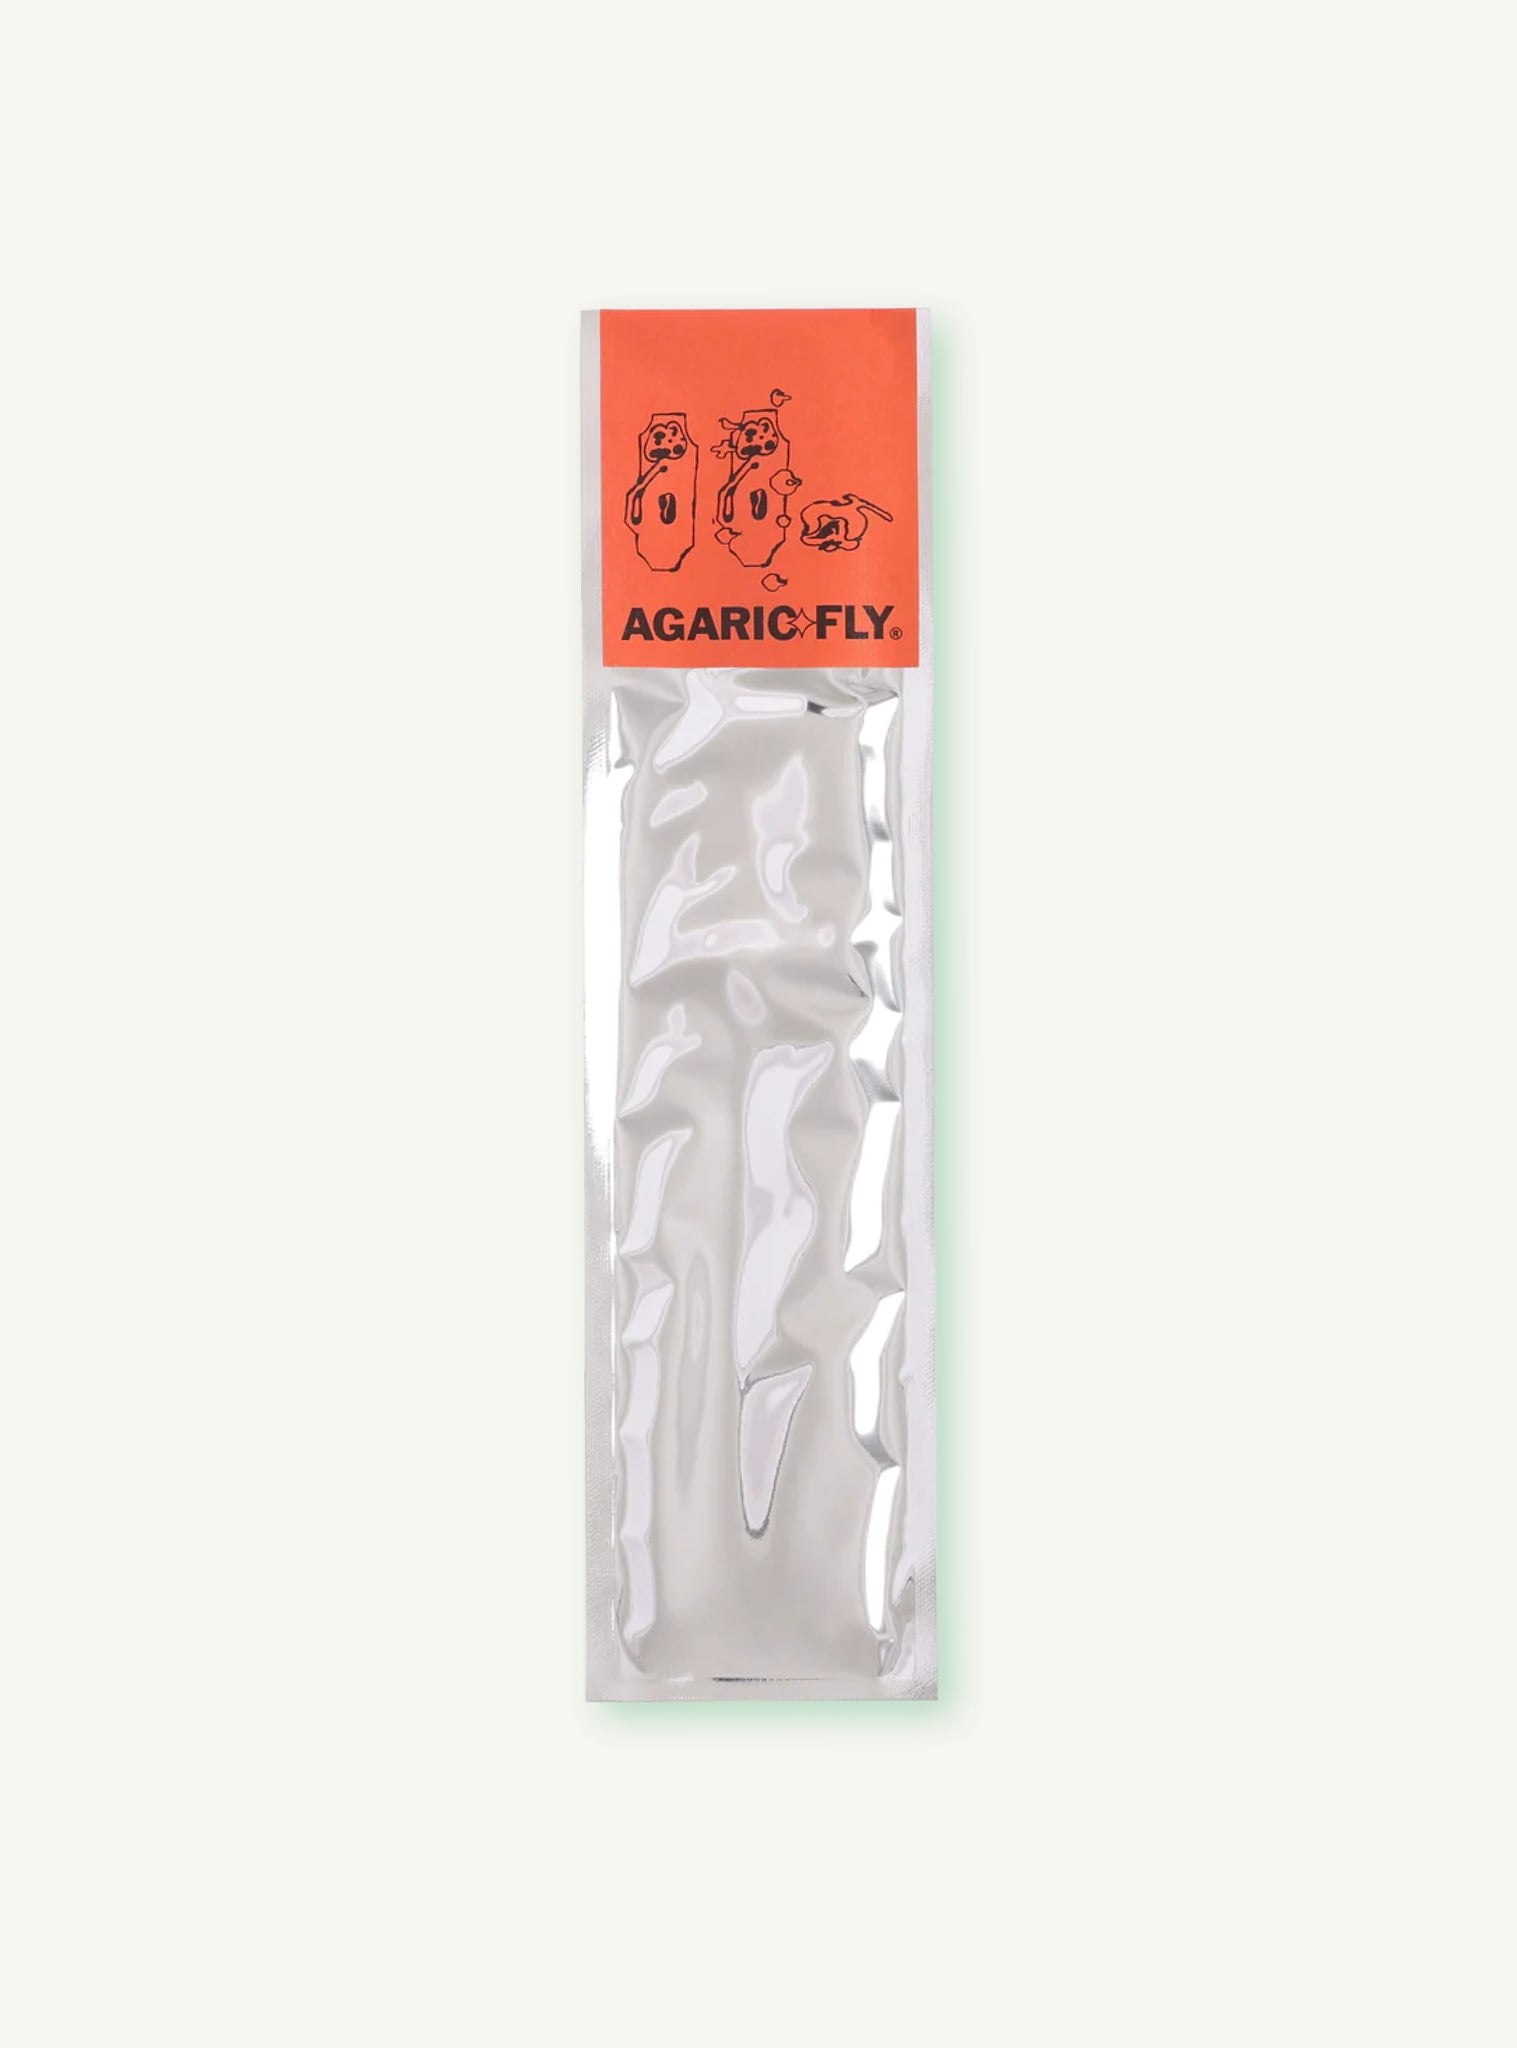 READING ENVIRONMENT ENHANCER: Agaric Fly Incense